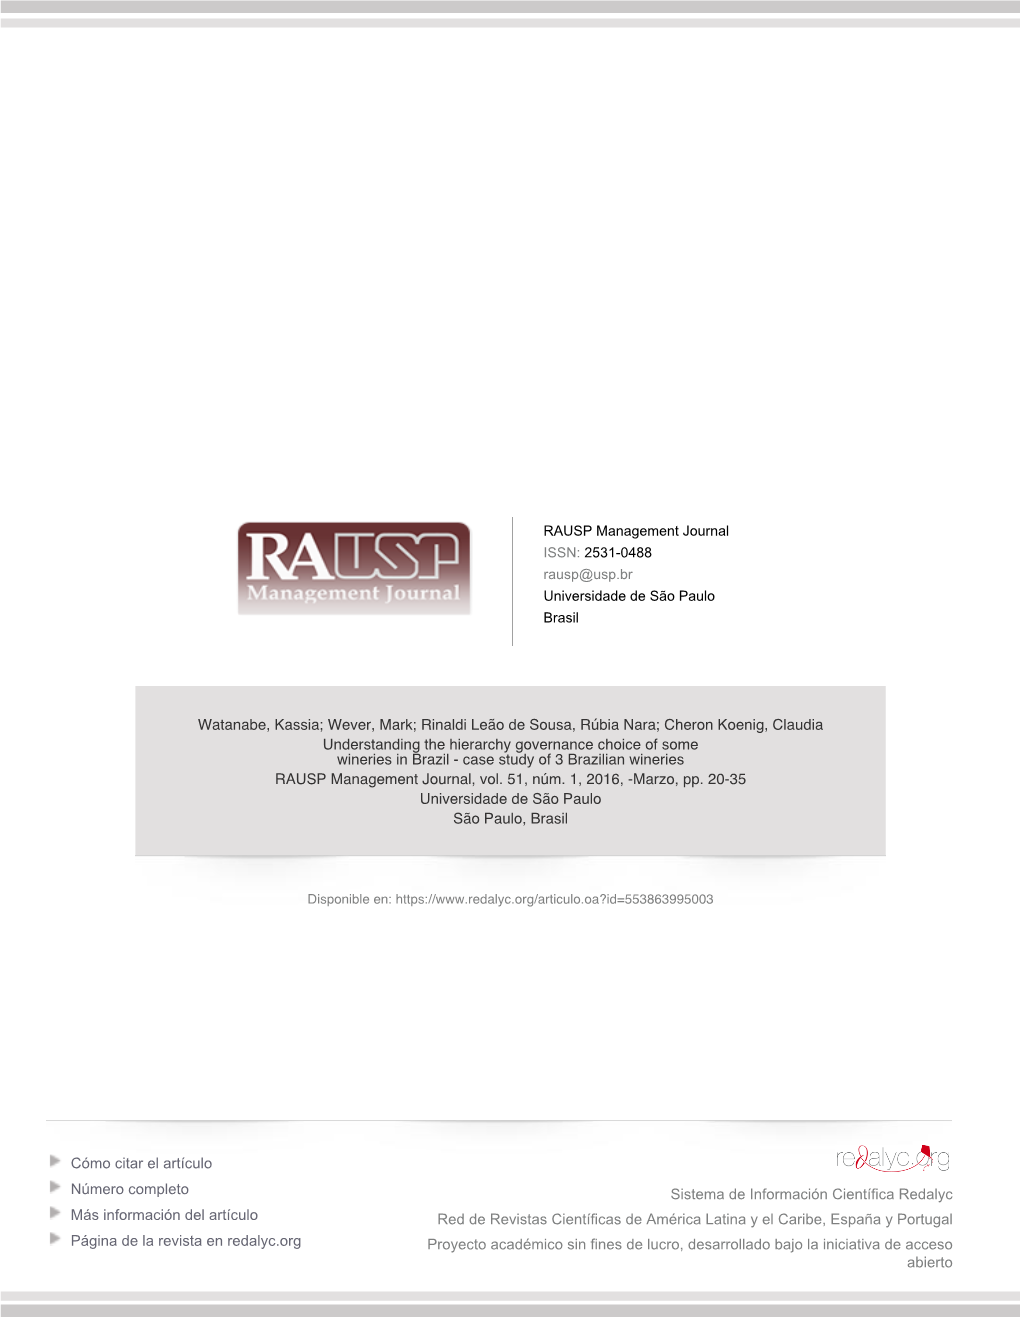 Case Study of 3 Brazilian Wineries RAUSP Management Journal, Vol